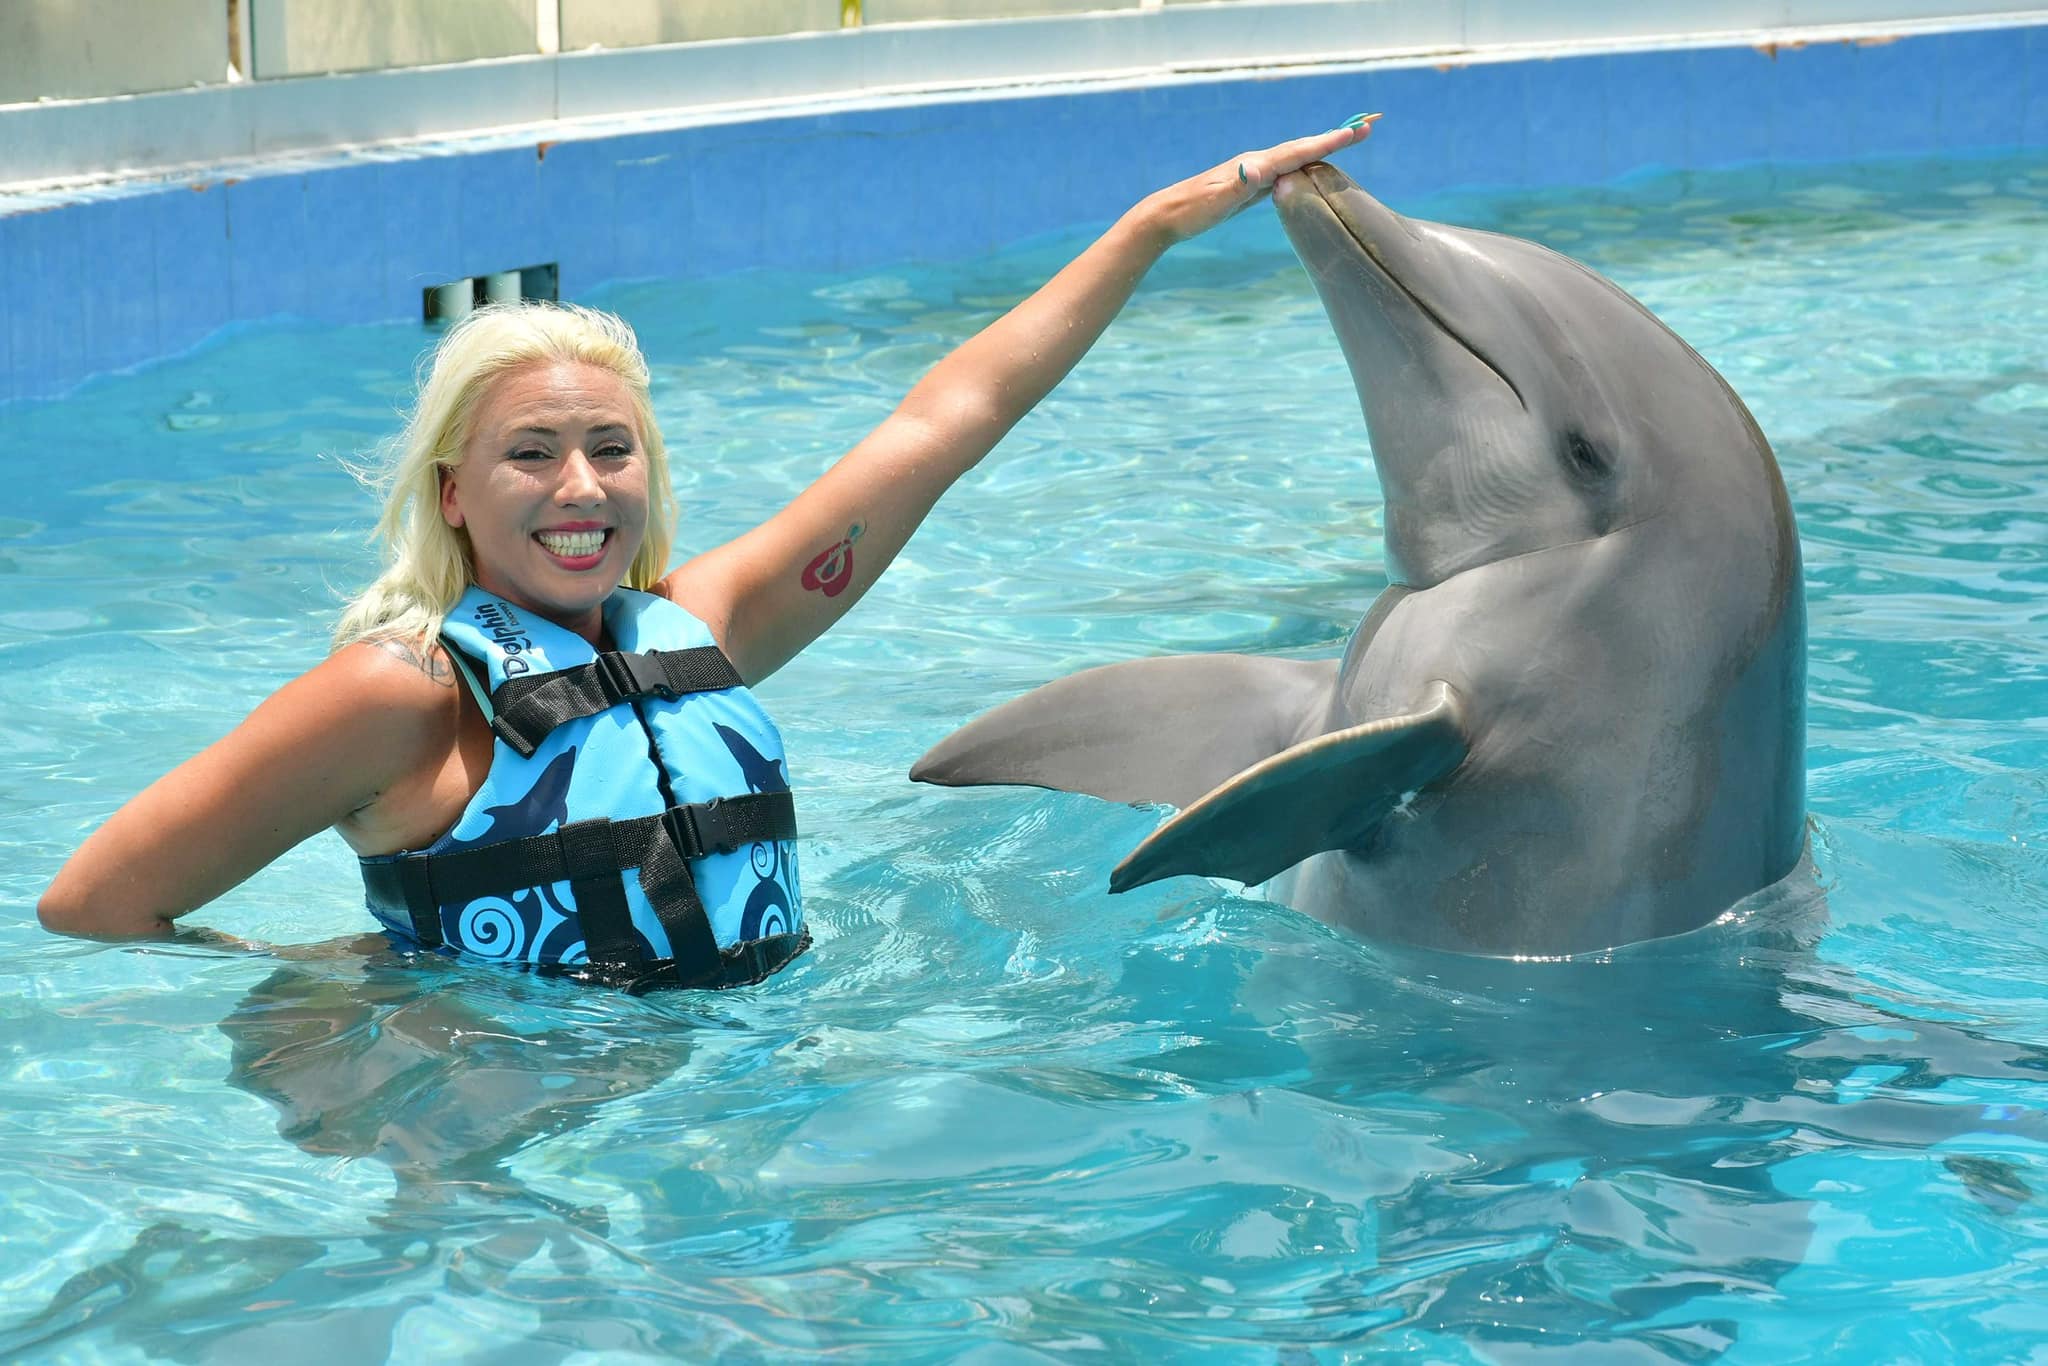 Swim with me, dolphin life #dolphin #Mexico #IWantToDoItAgain ￼#IAmJuicyJen